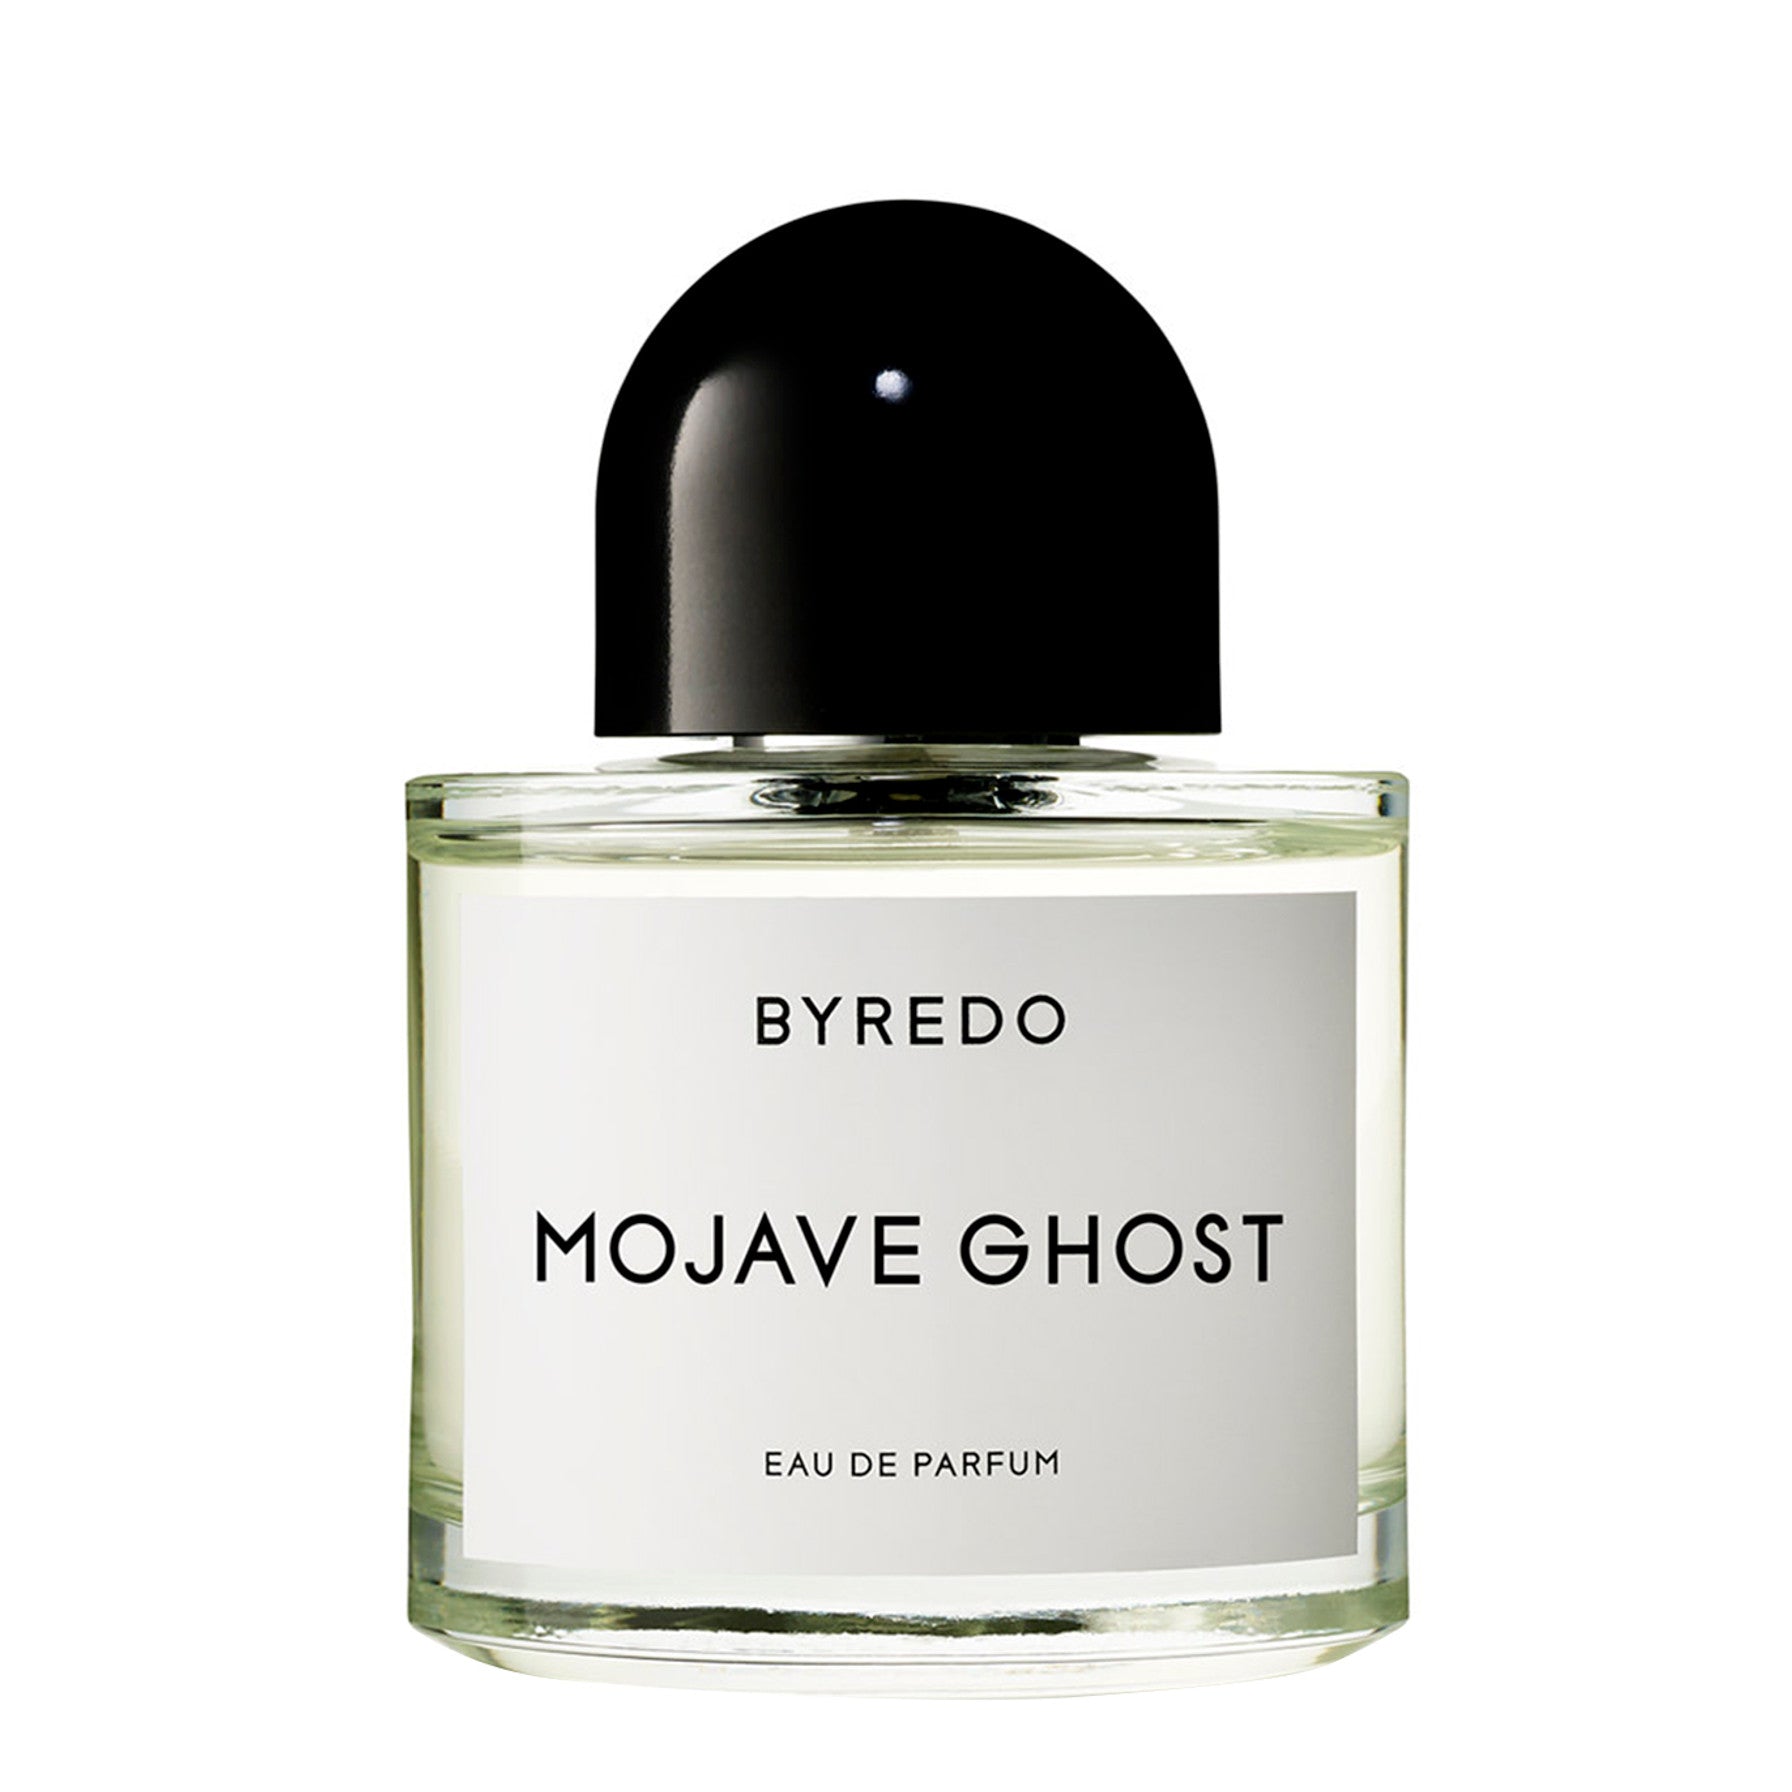 Byredo - “Mojave Ghost” Eau de Parfum 100ml view 1